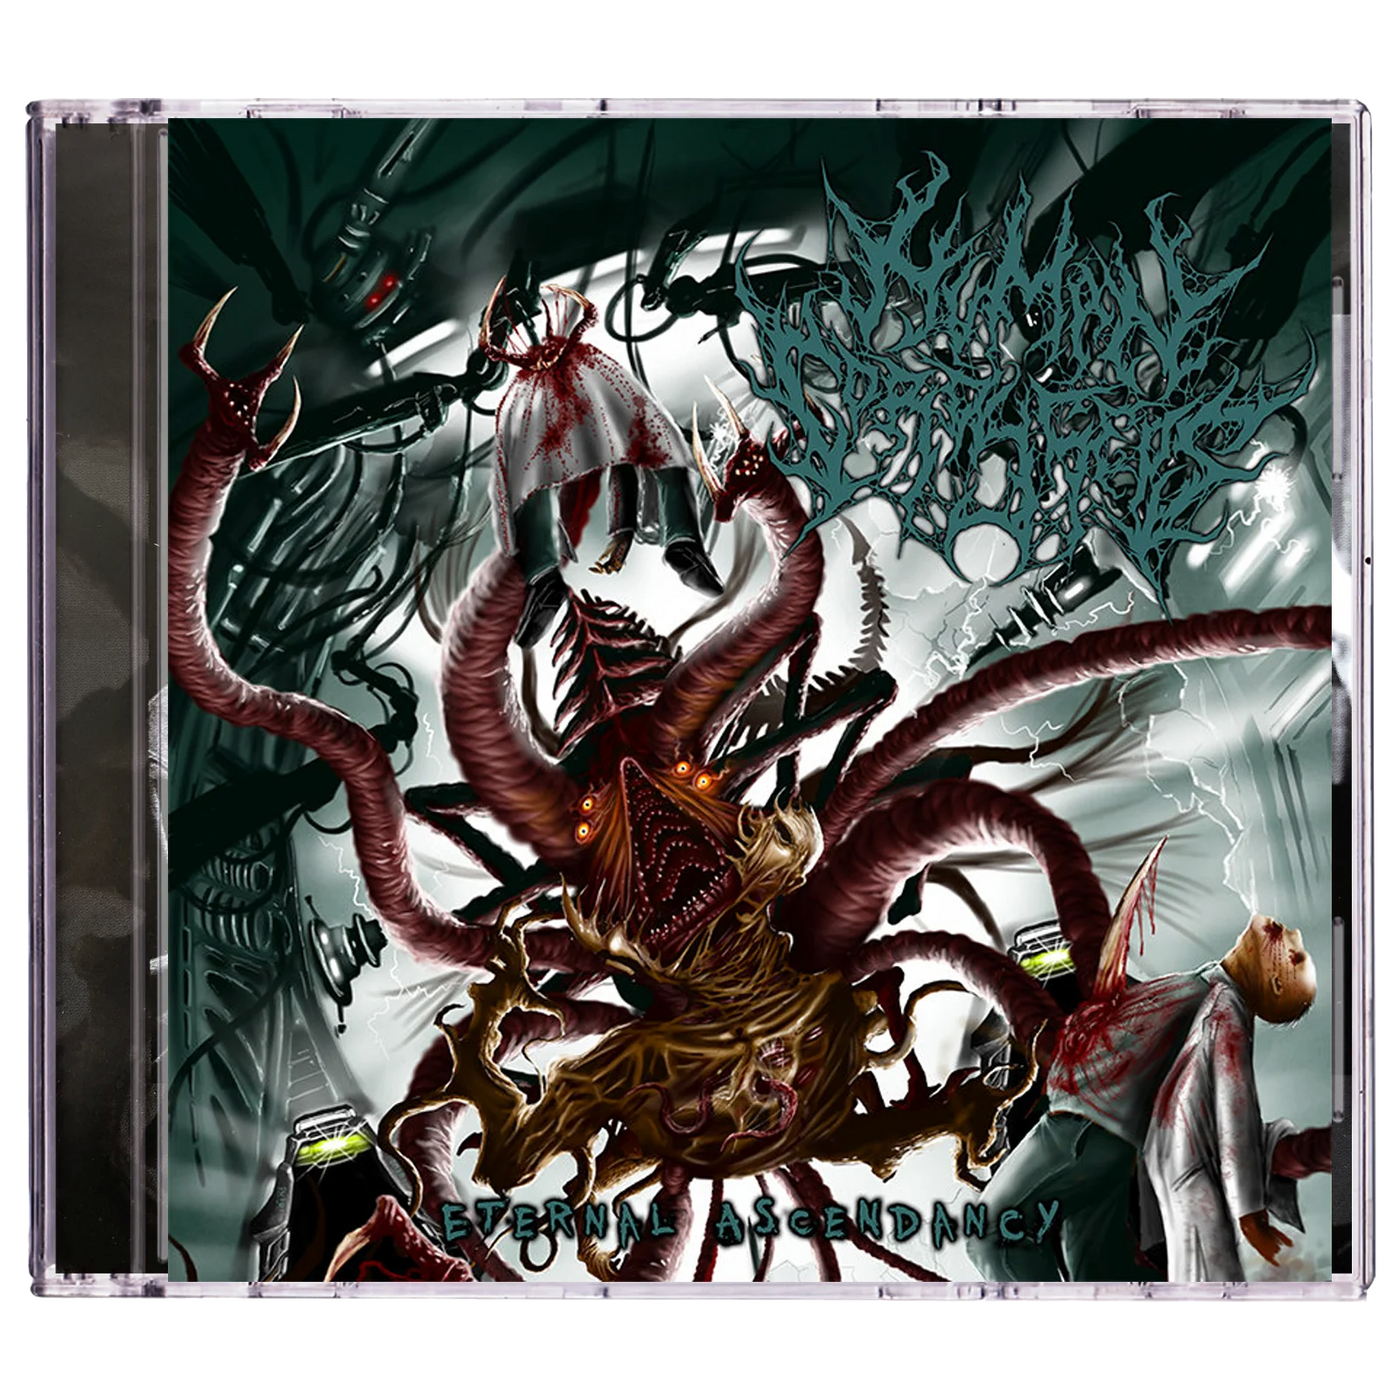 Human Cordyceps 'Eternal Ascendancy' CD